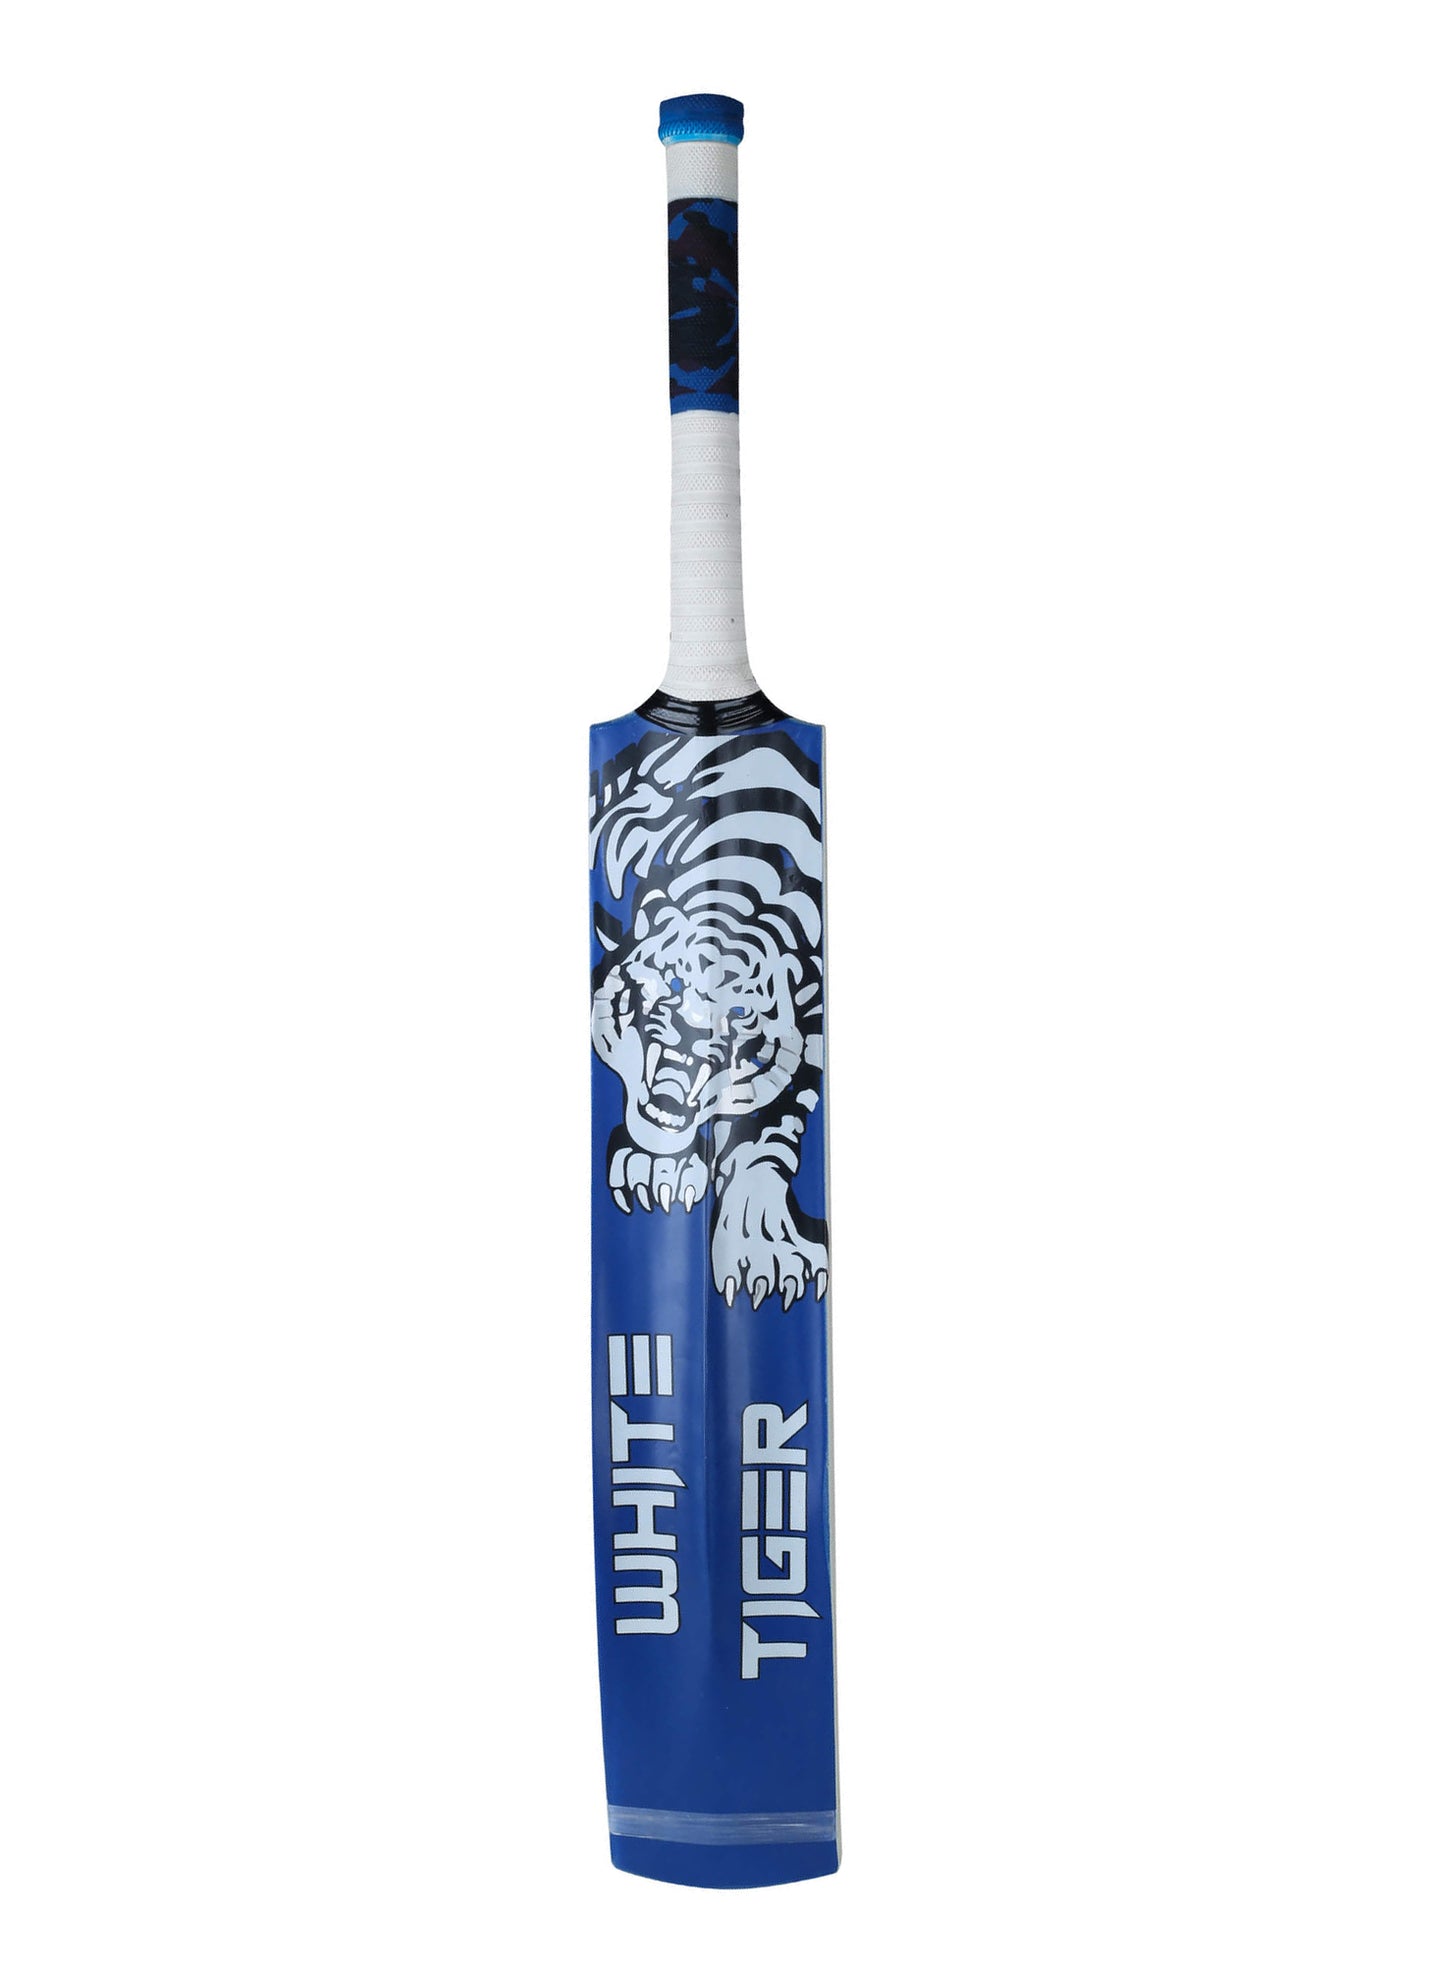 CA White-Tiger tennis ball - tape ball cricket bat